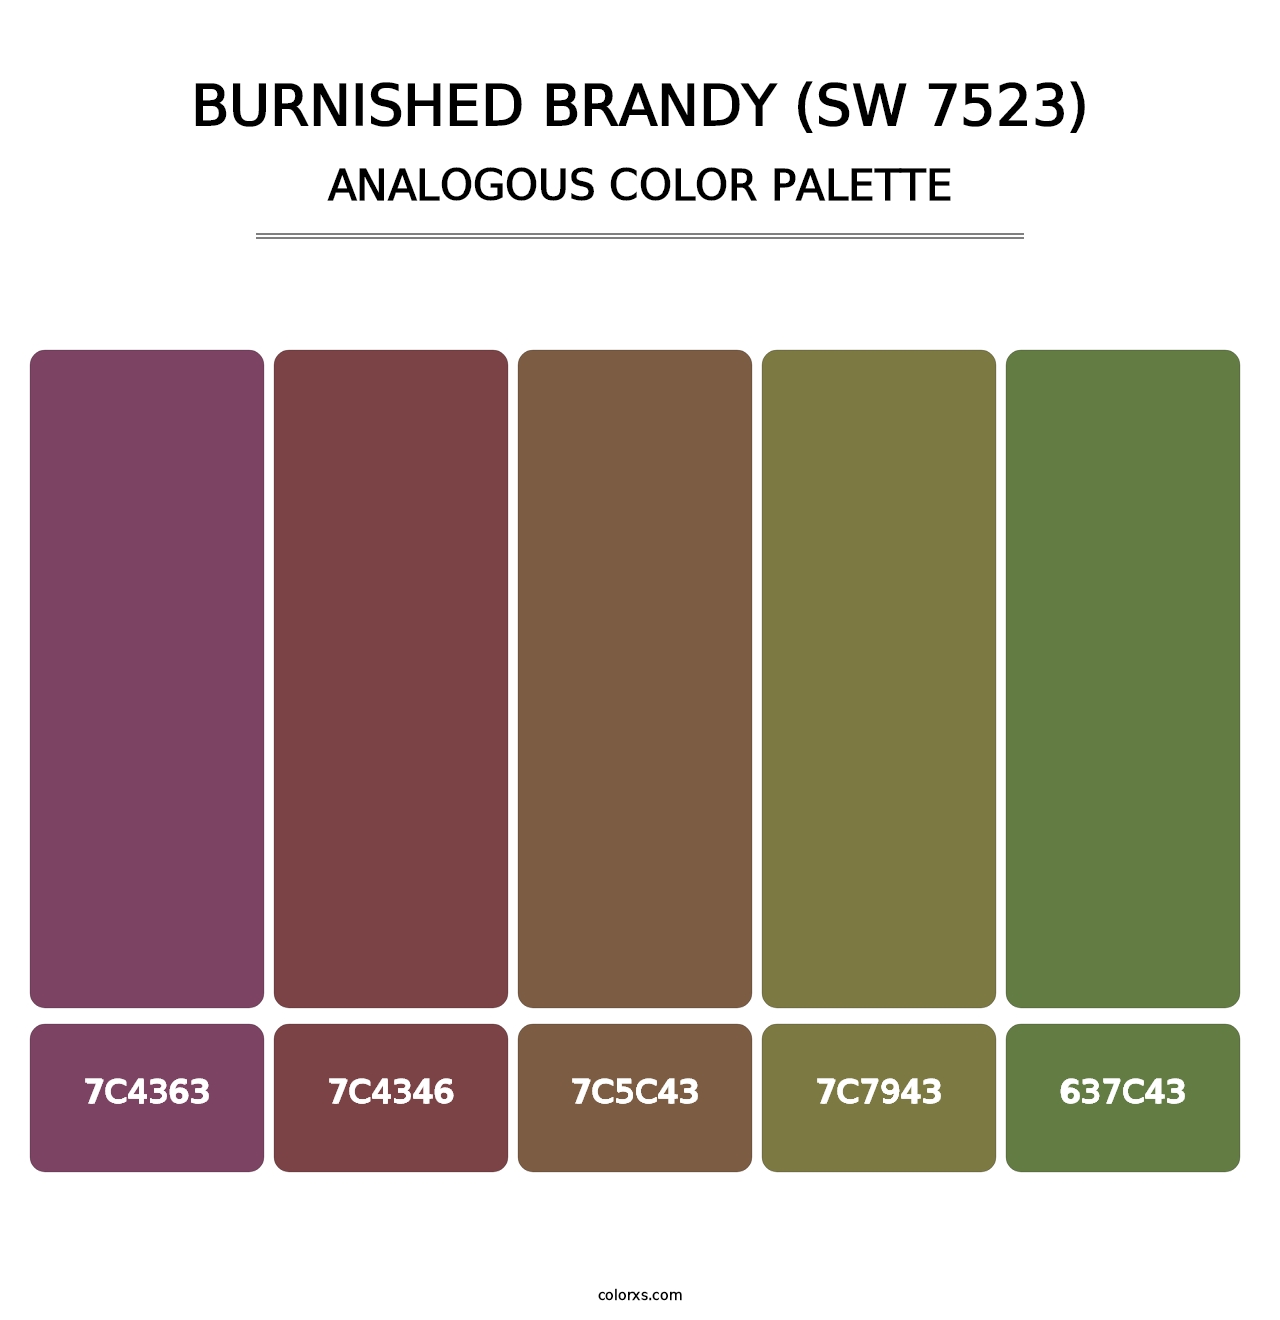 Burnished Brandy (SW 7523) - Analogous Color Palette